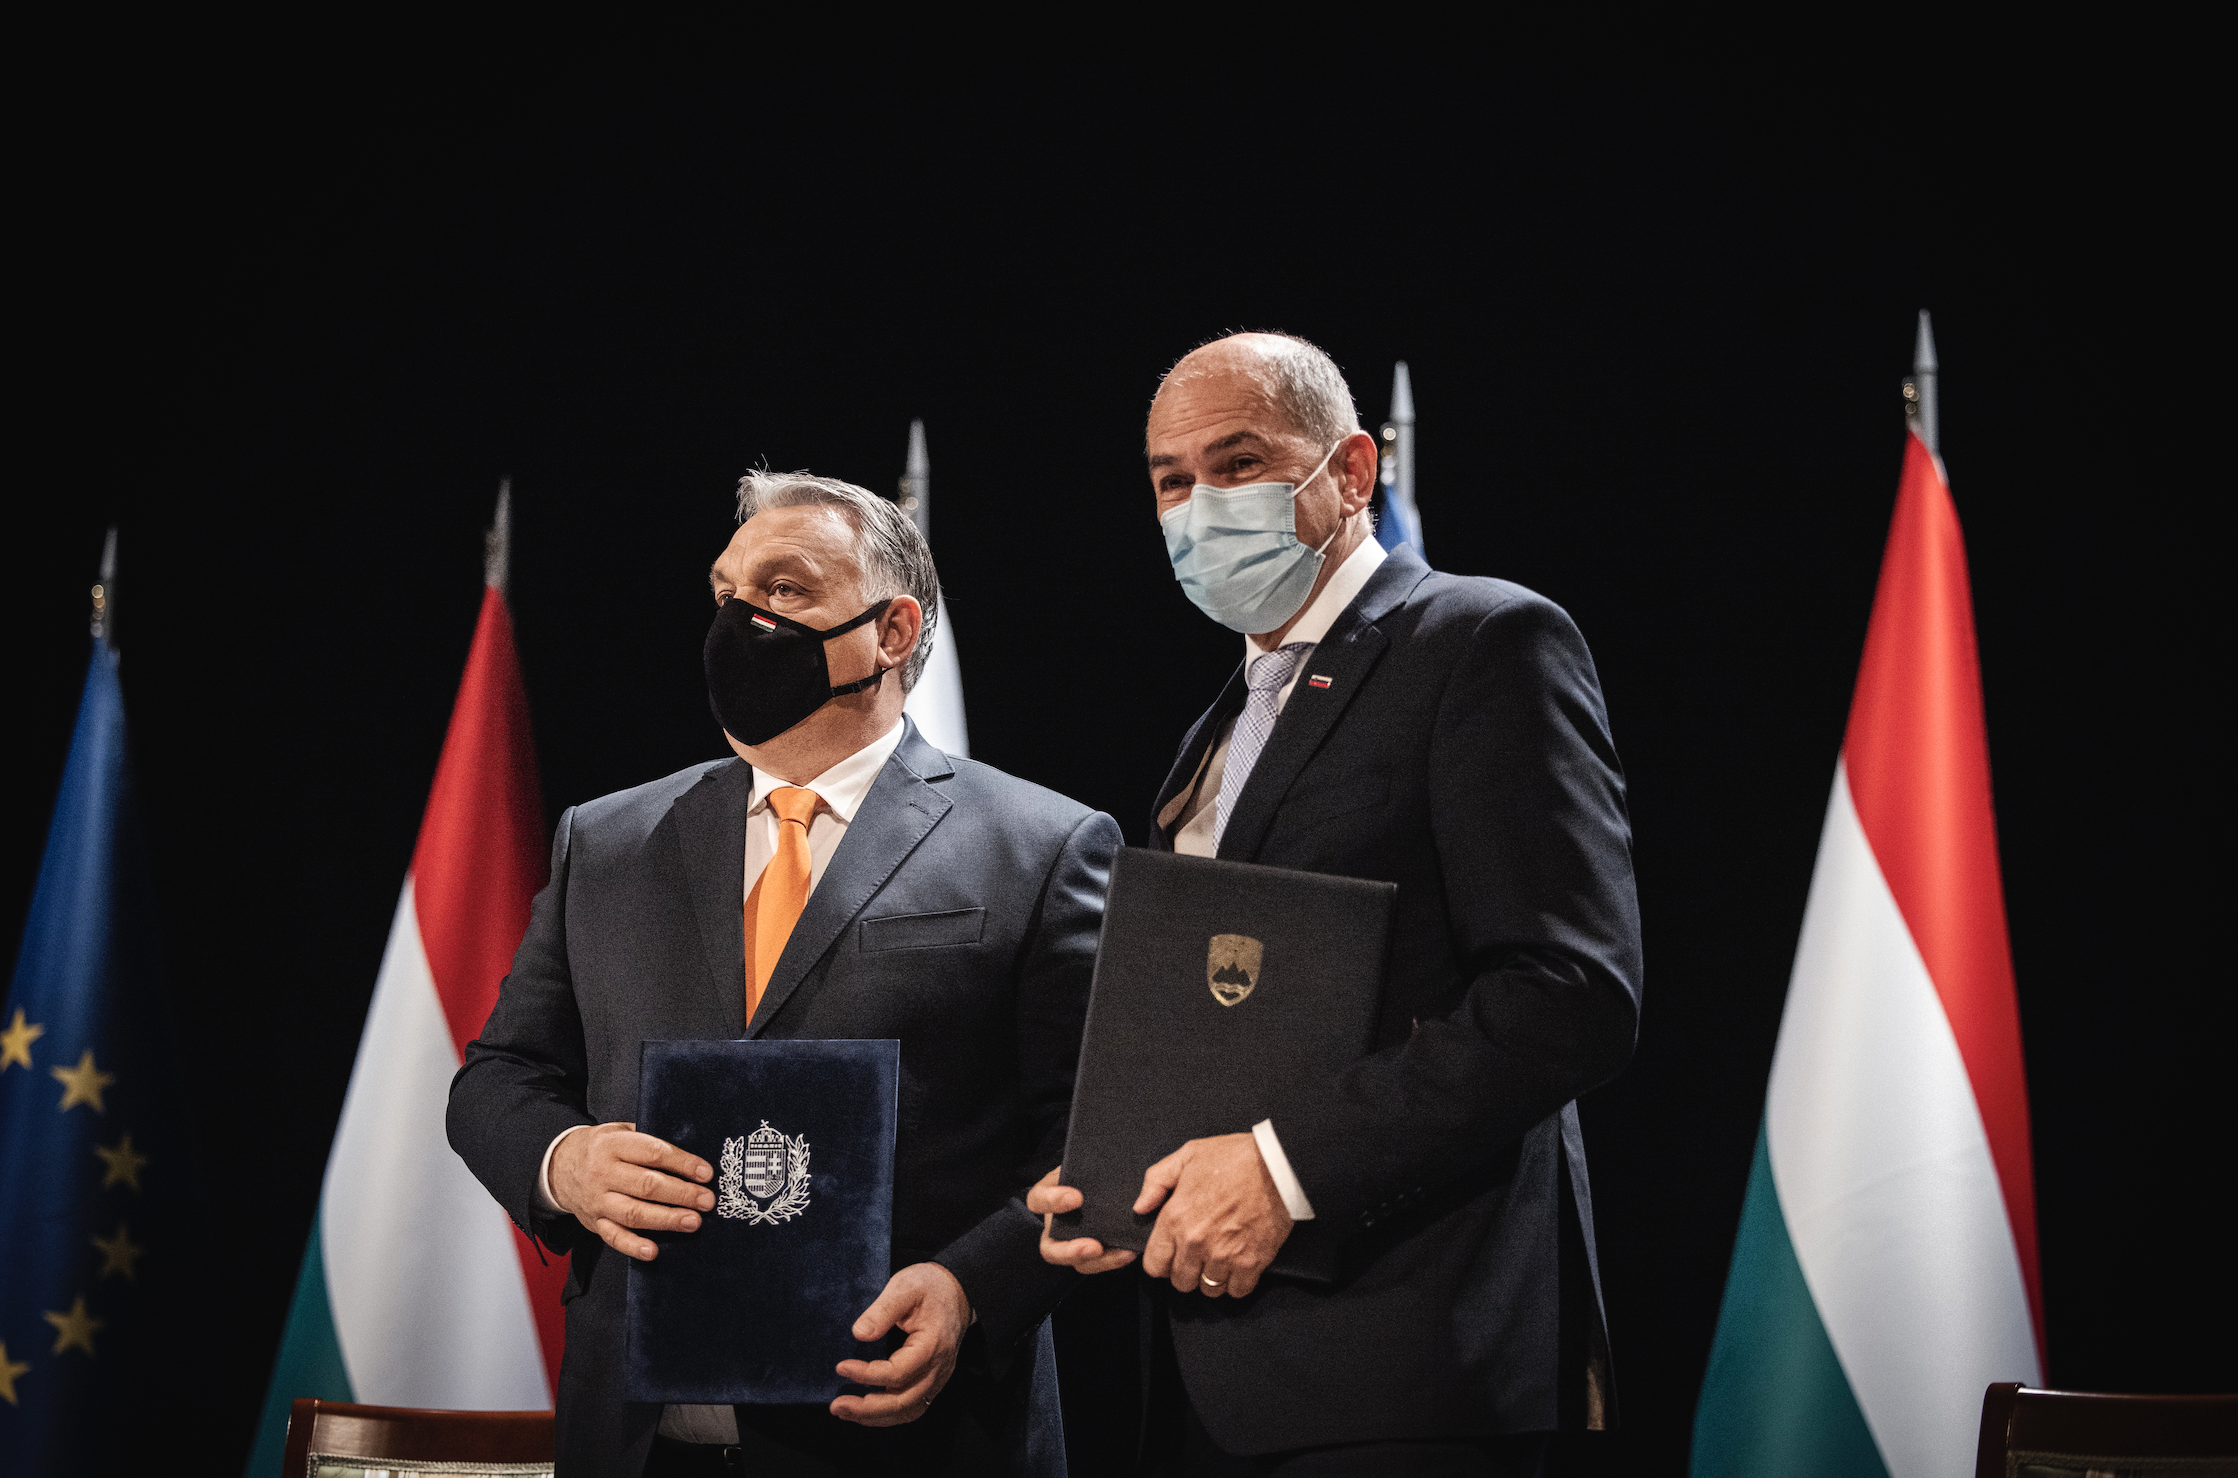 Hungary, Slovenia sign agreement on crossborder developments